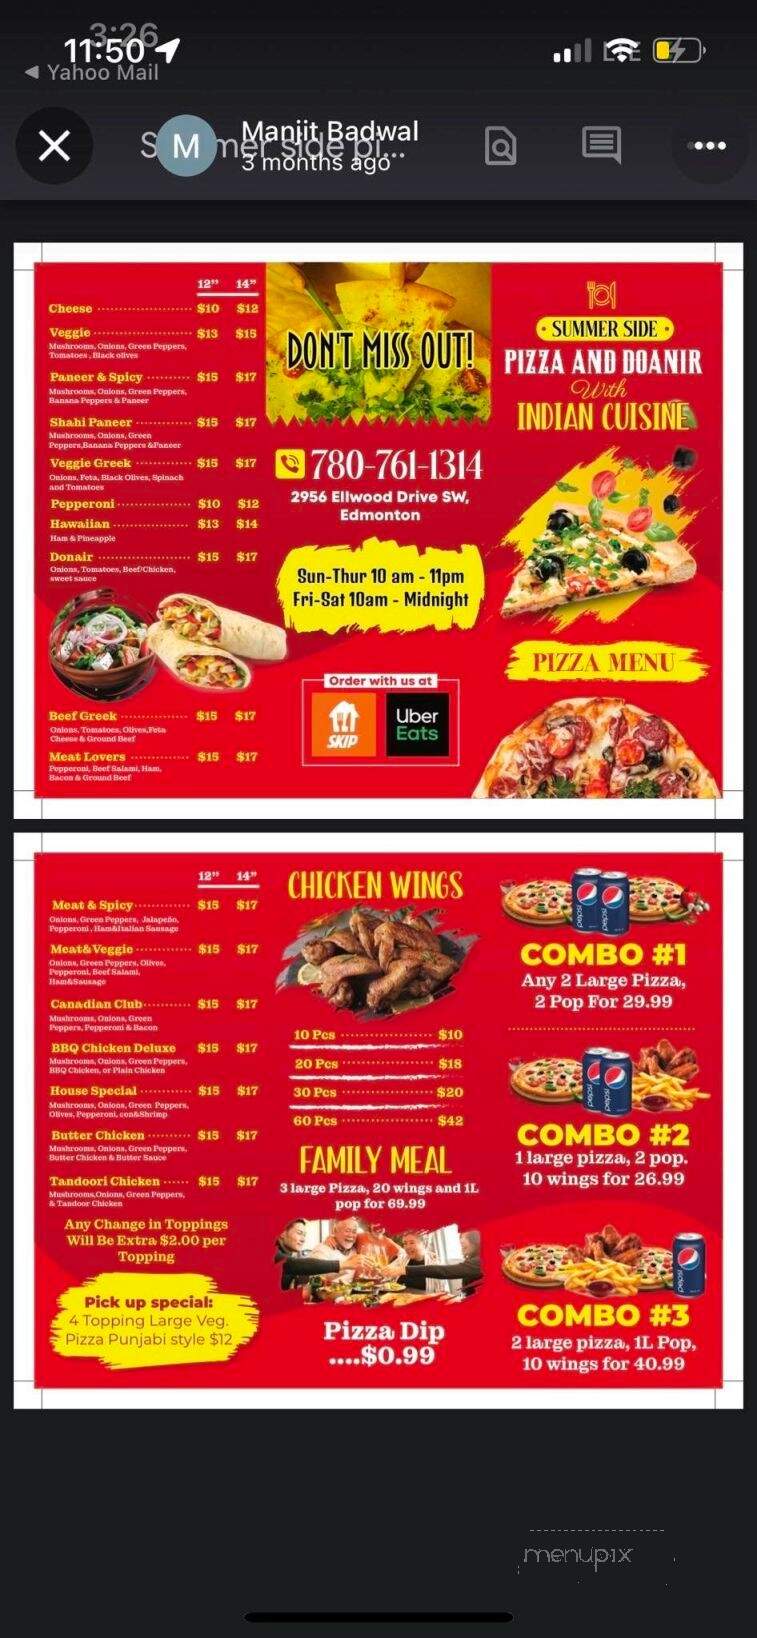 Summerside Pizza & Donair - Edmonton, AB